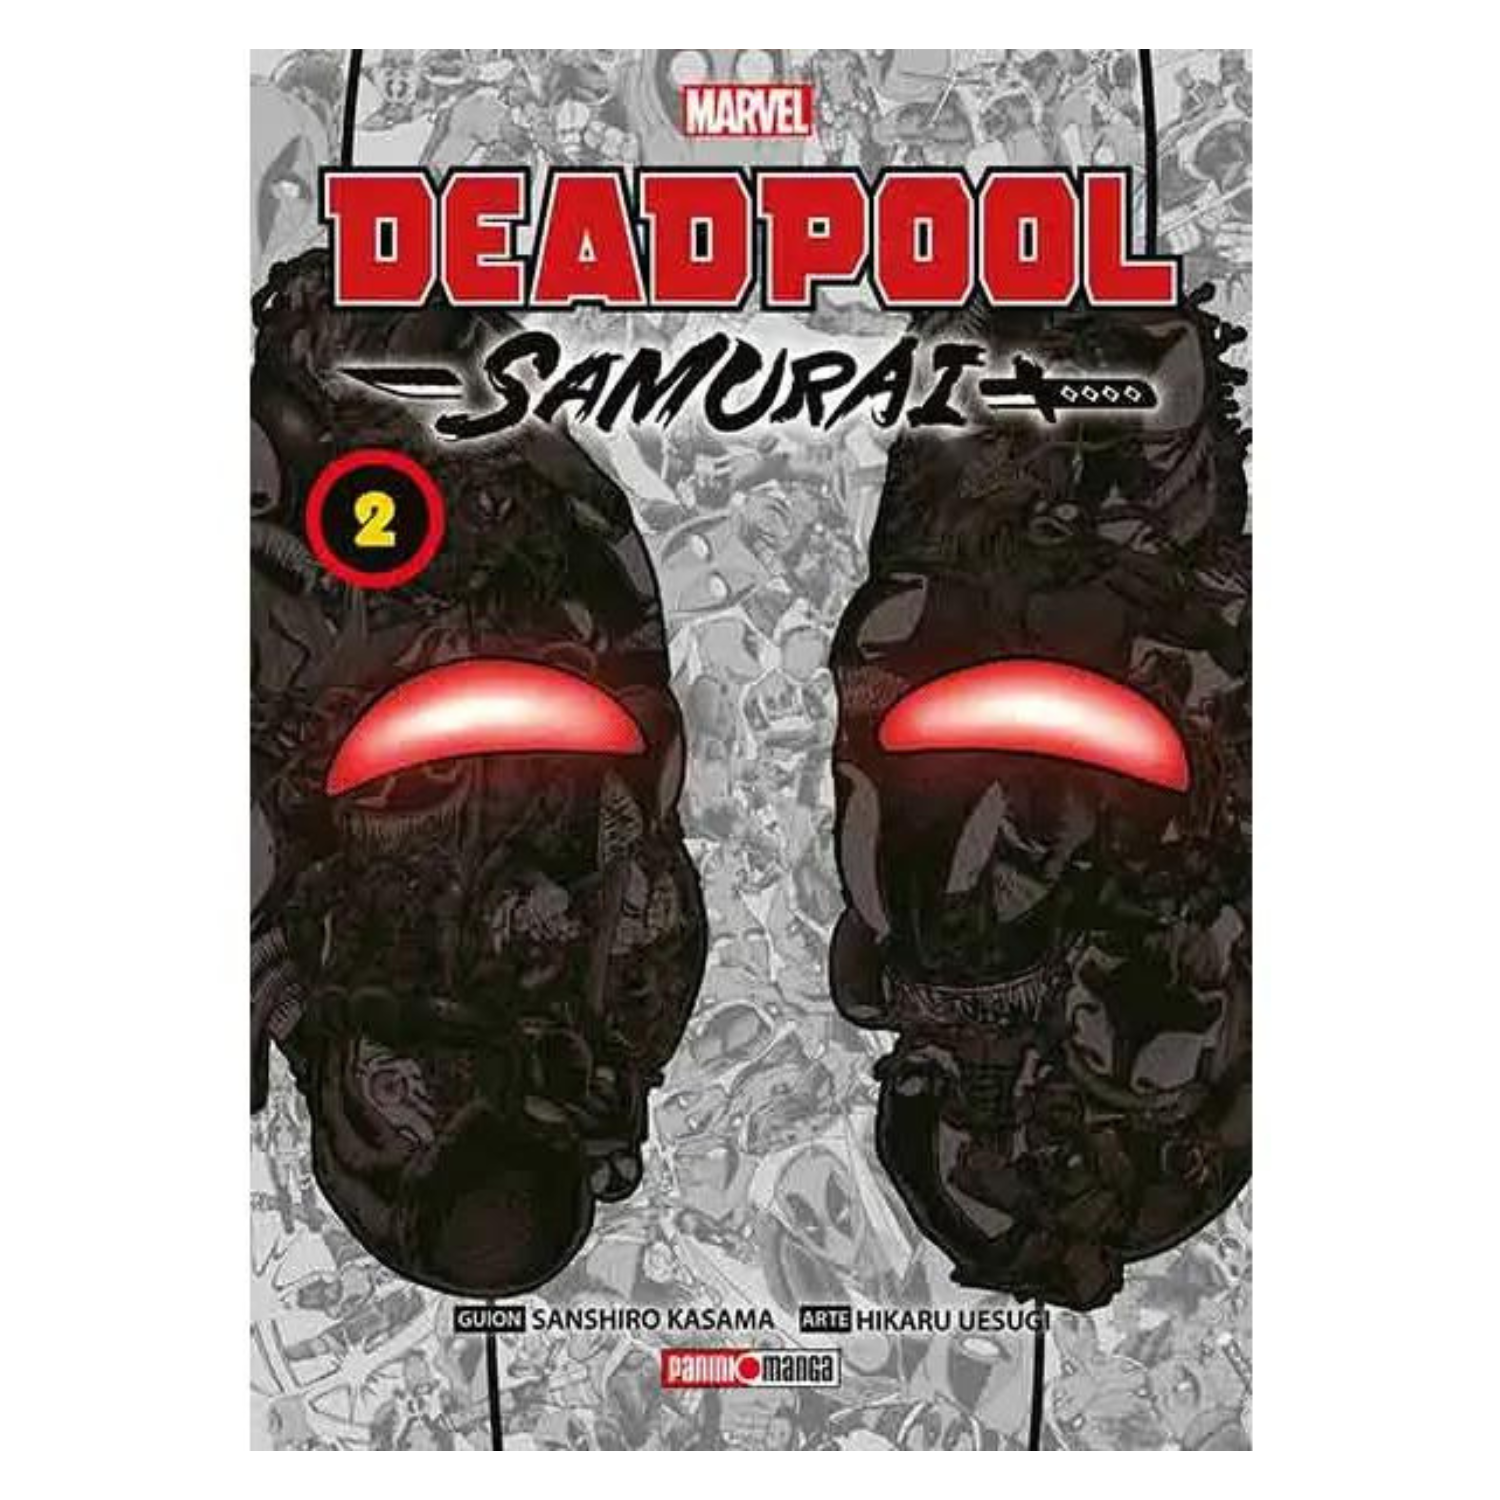 Manga Deadpool Samurai 2